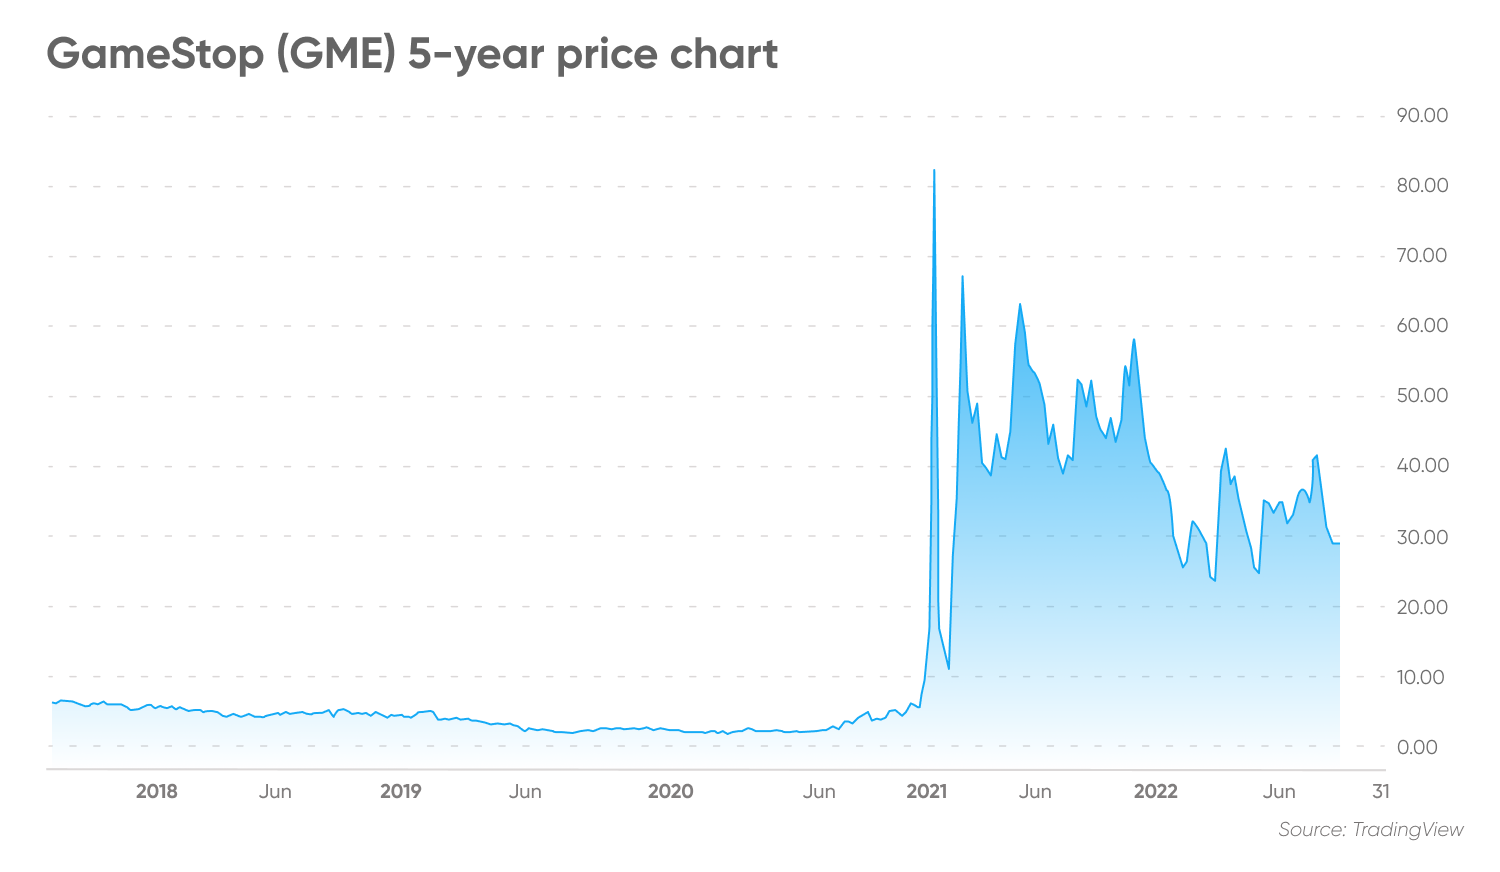 GameStop (GME) 5-year price chart